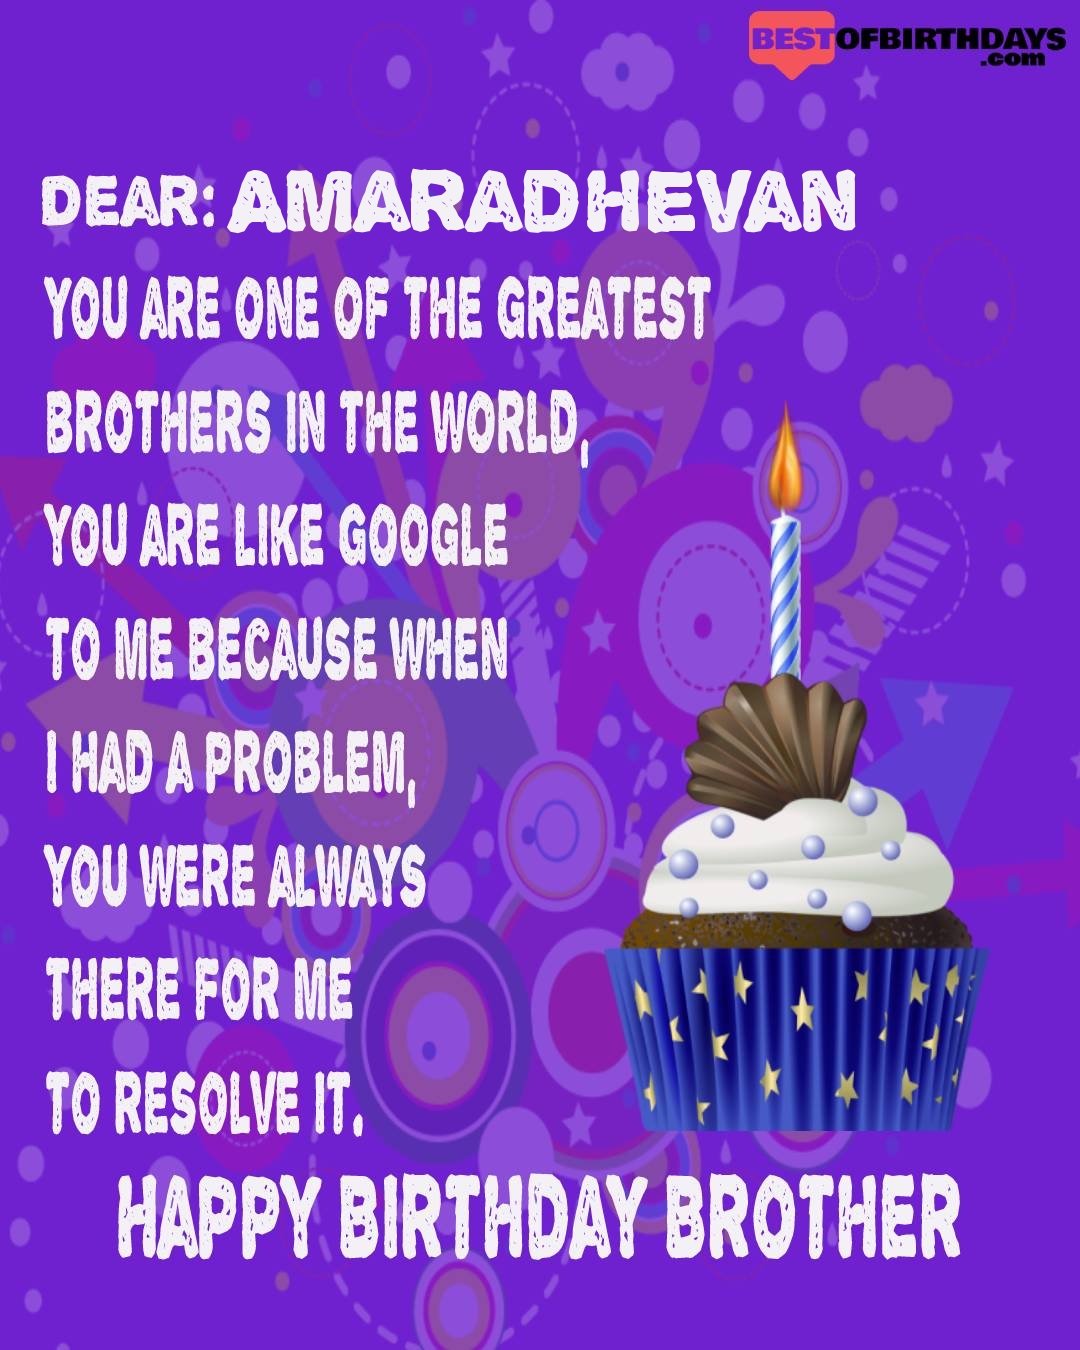 Happy birthday amaradhevan bhai brother bro